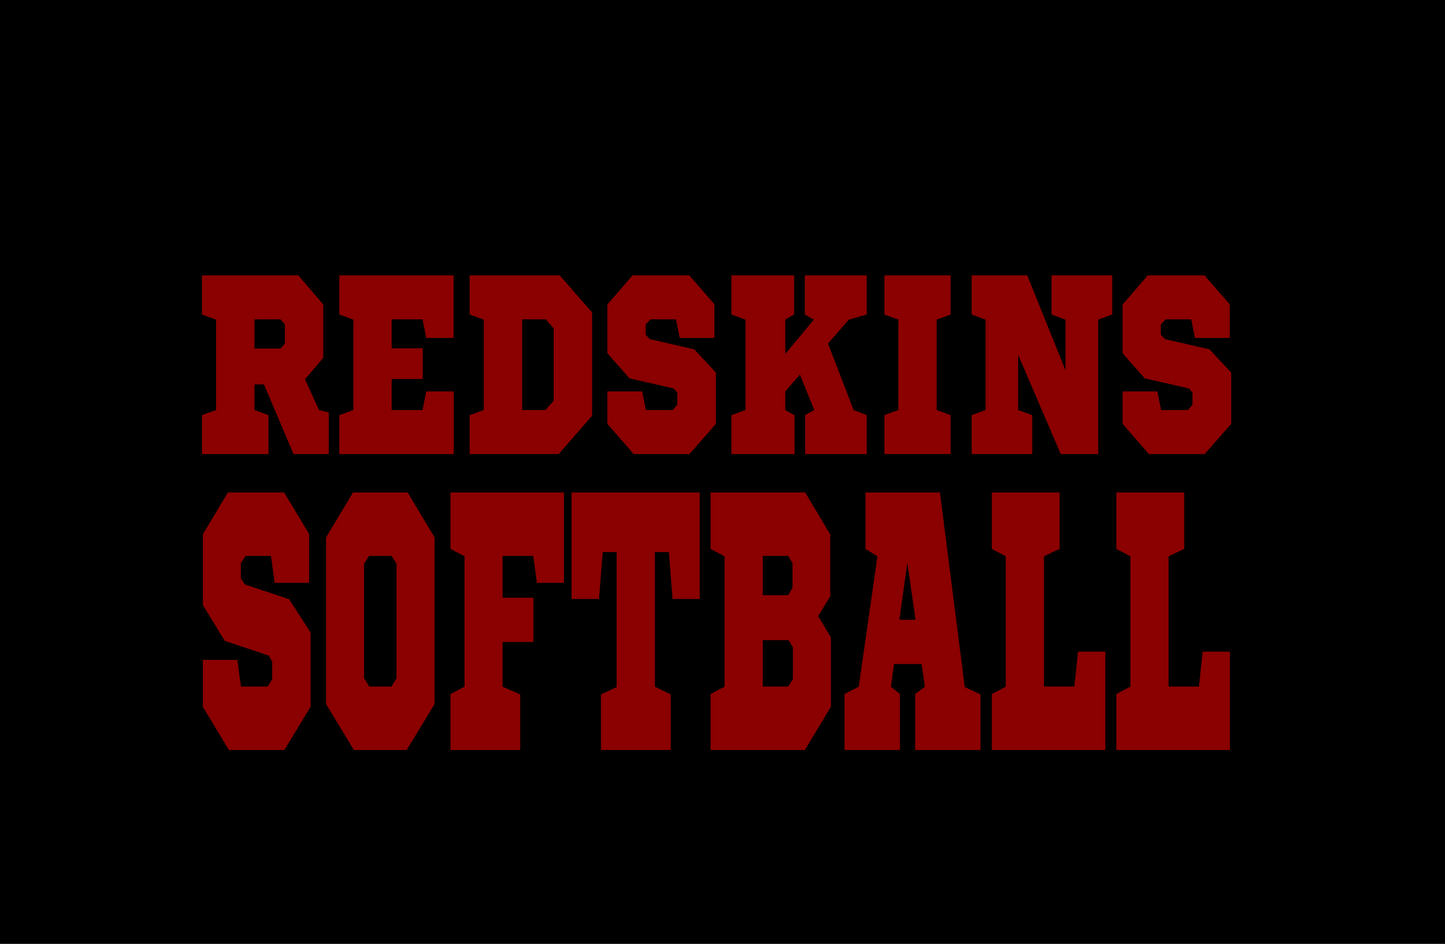 Redskins Softball Outdoor Vinyl Sticker - Any Size - Car Truck Window Decal